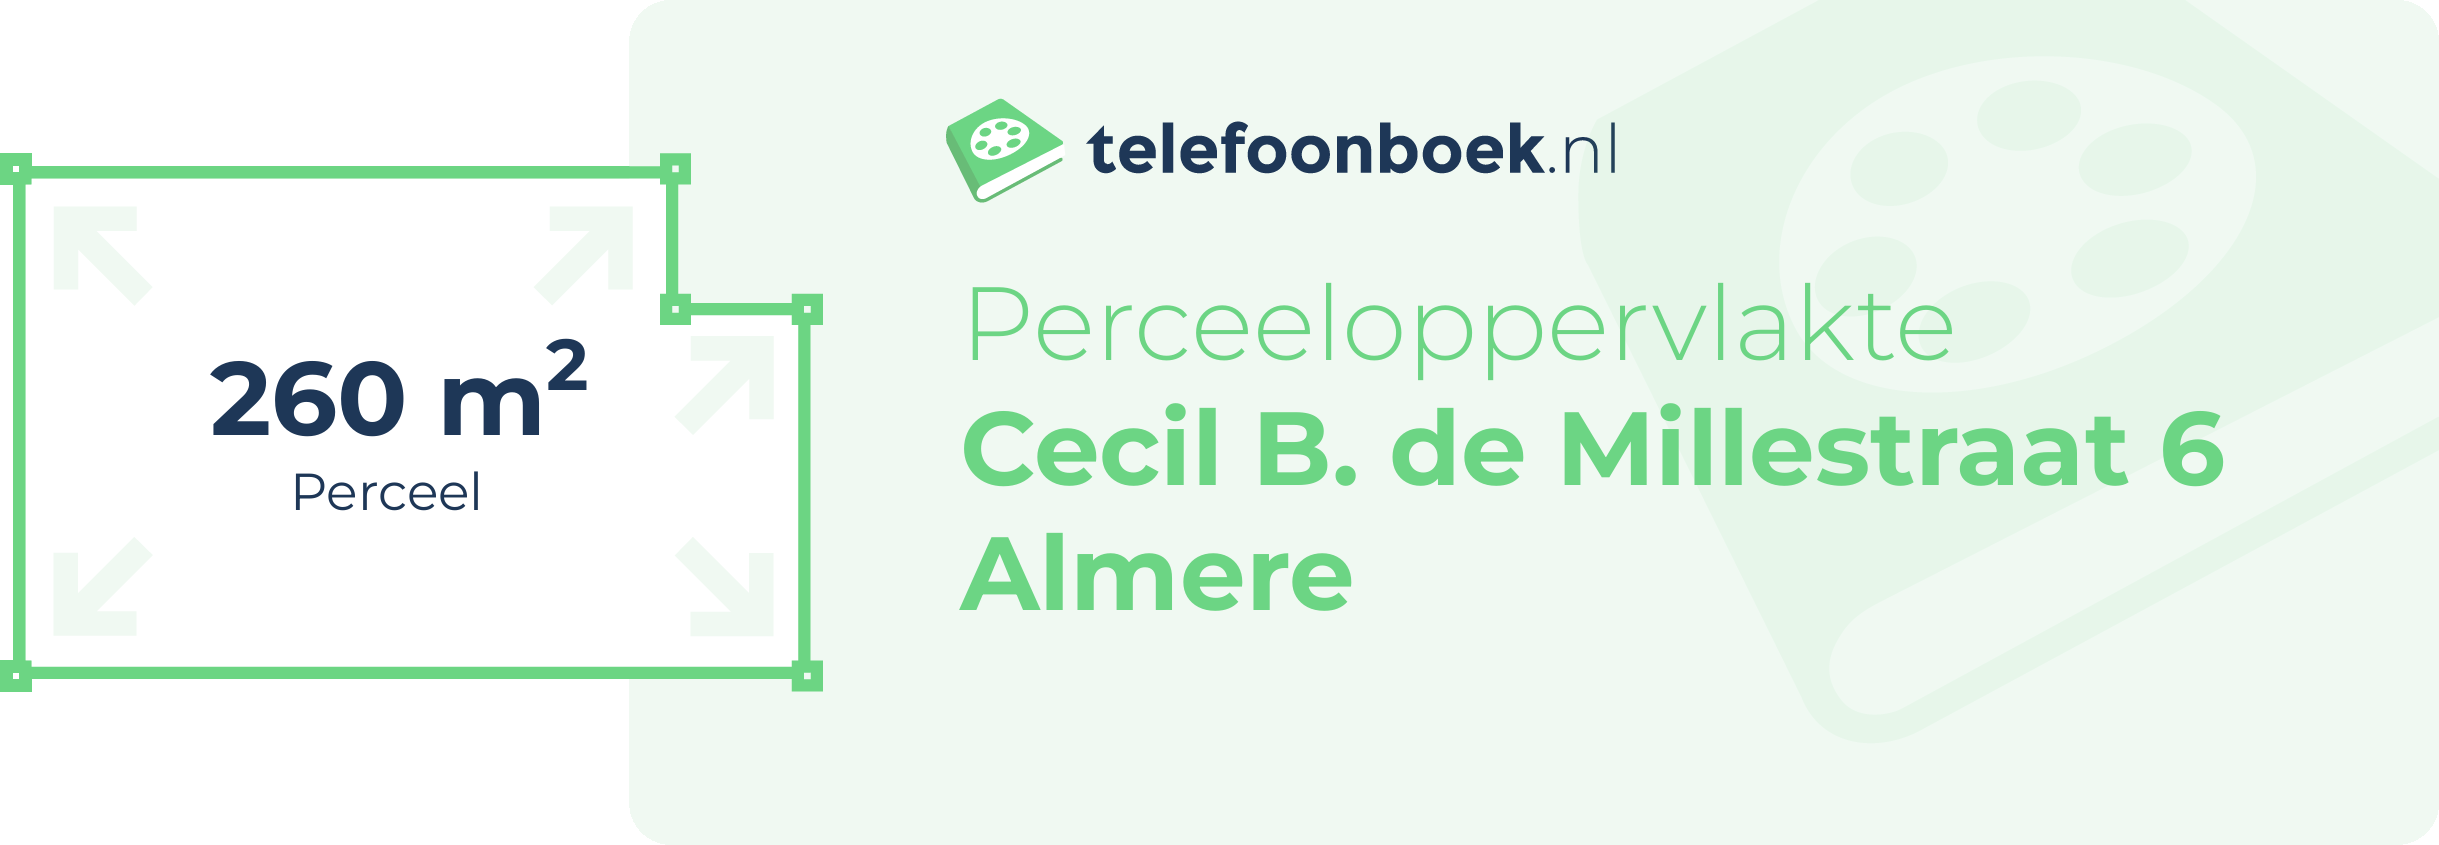 Perceeloppervlakte Cecil B. De Millestraat 6 Almere